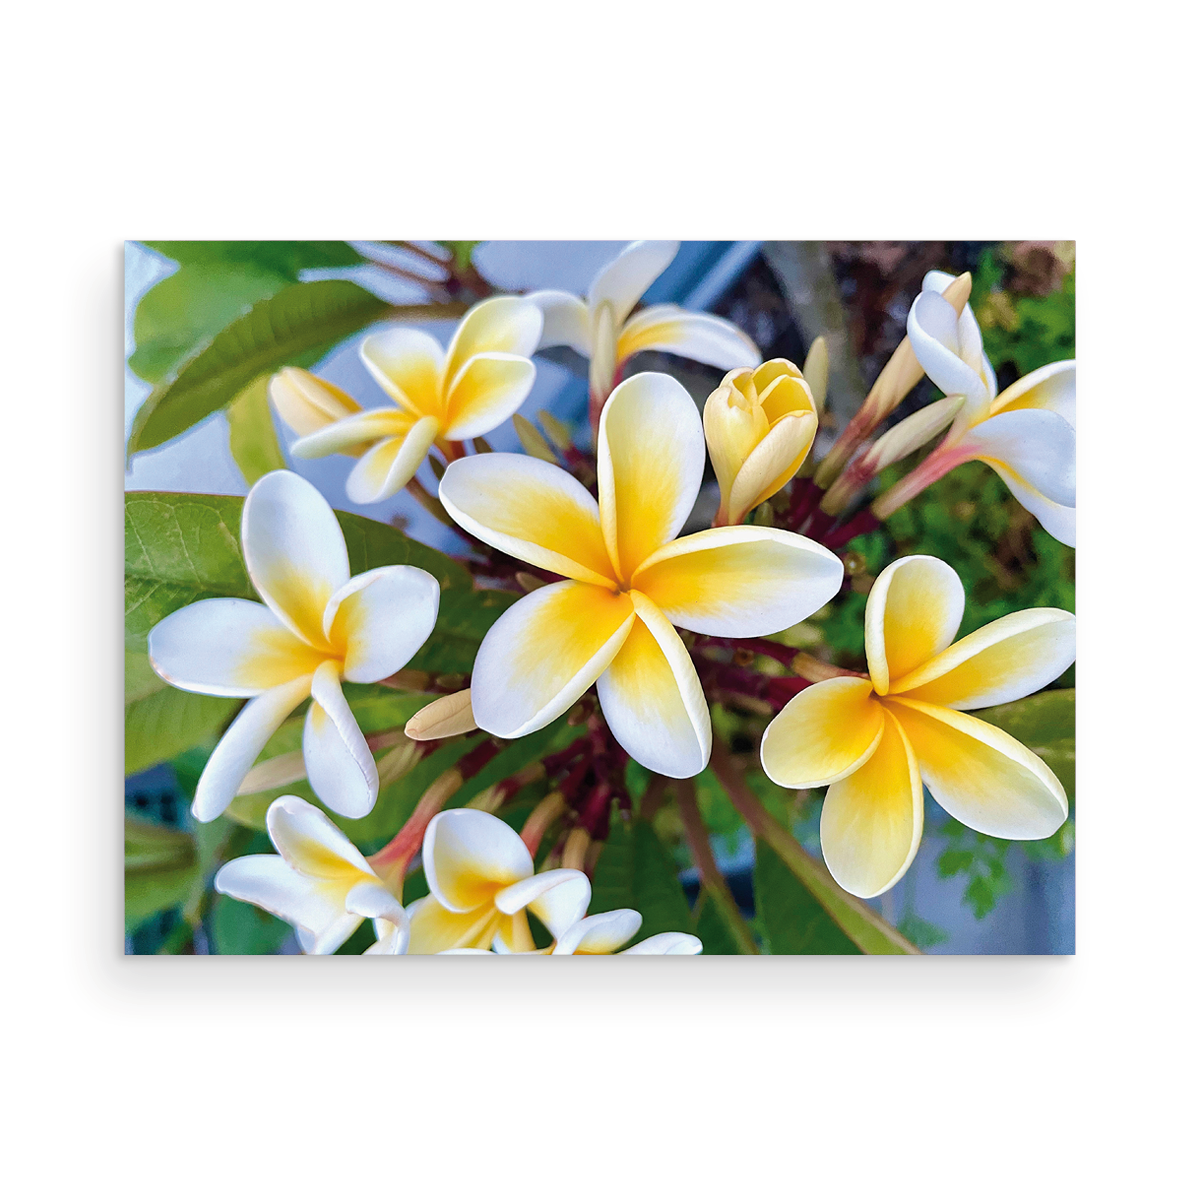 Maui Card Collection